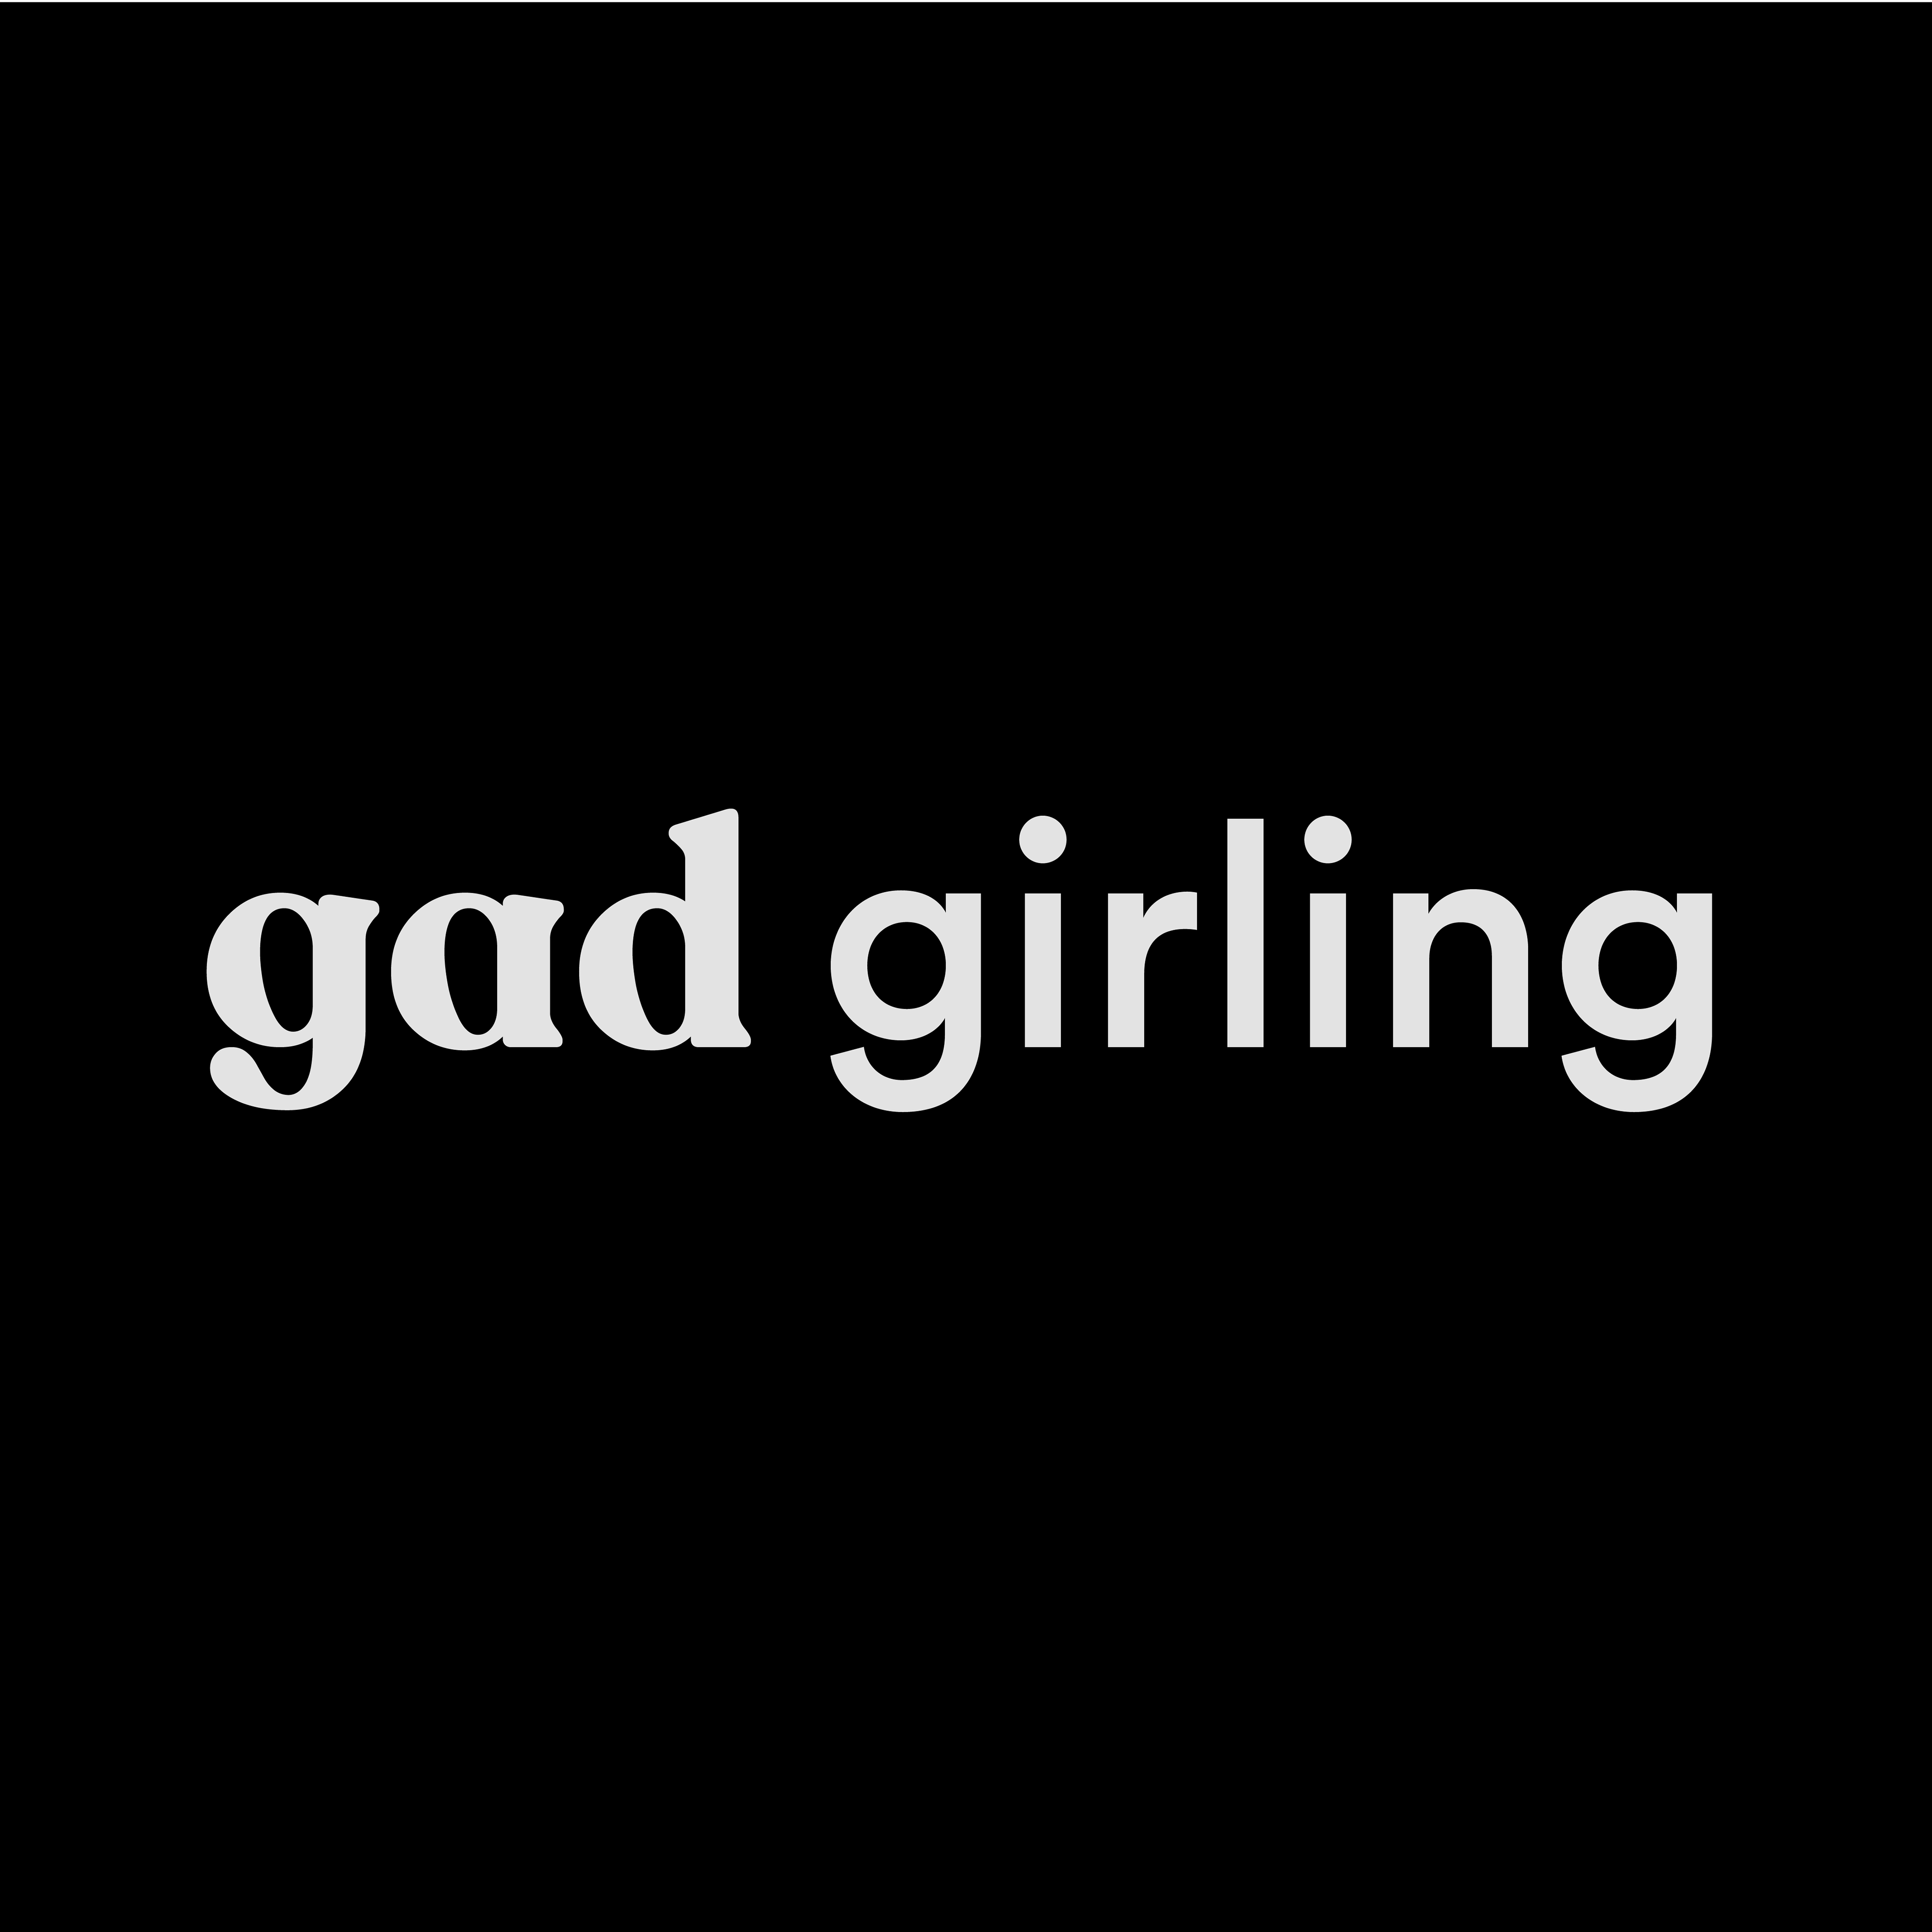 Gad Girling